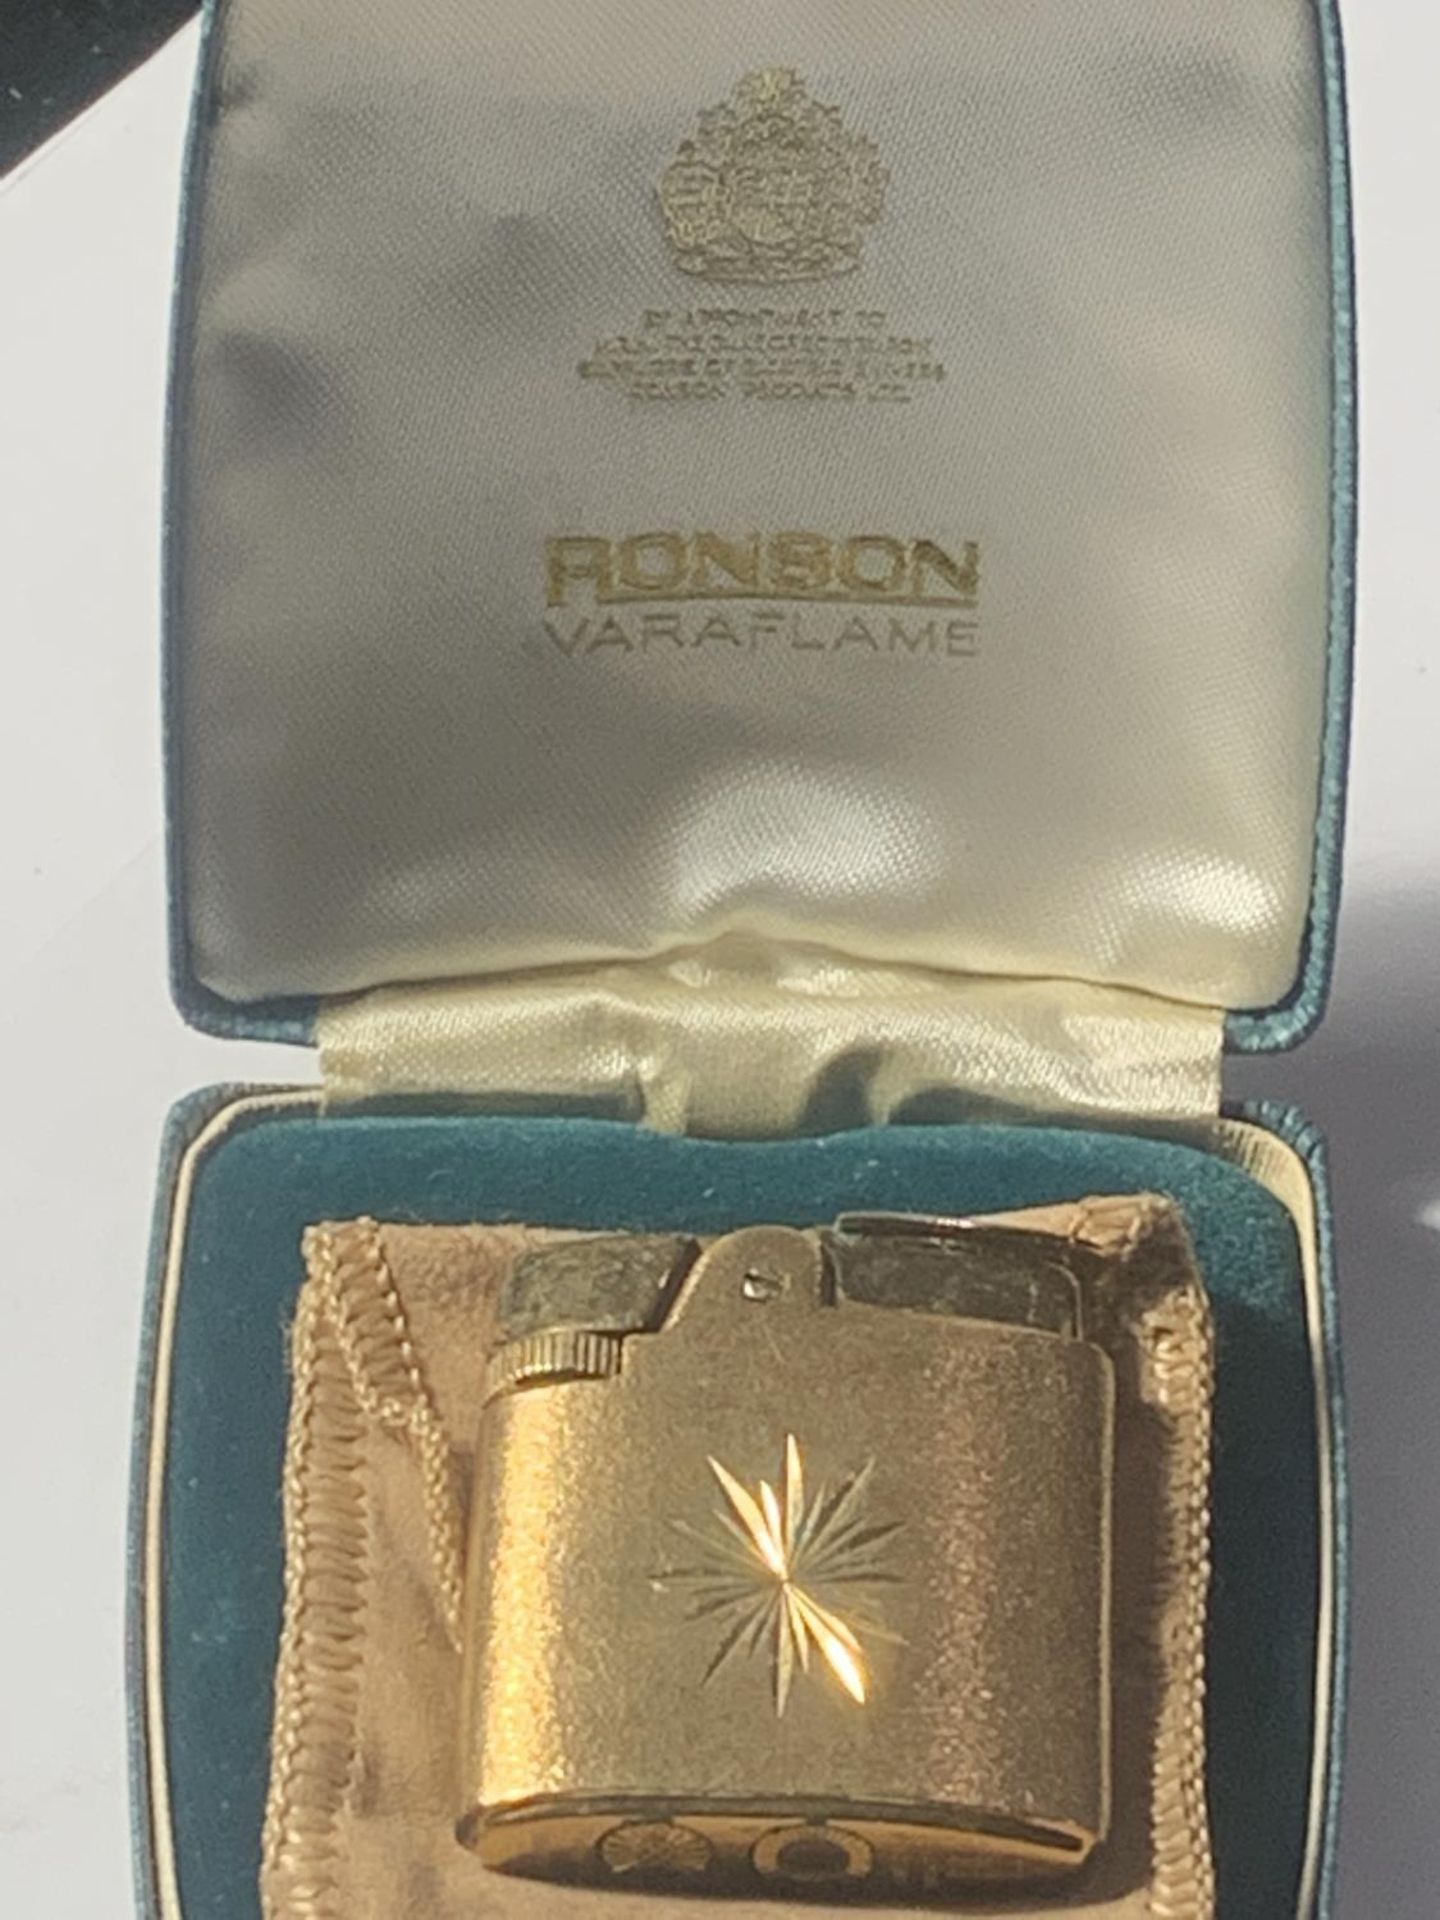 A VINTAGE VARAFLAME RONSON LIGHTER IN ORIGINAL PRESENTATION BOX